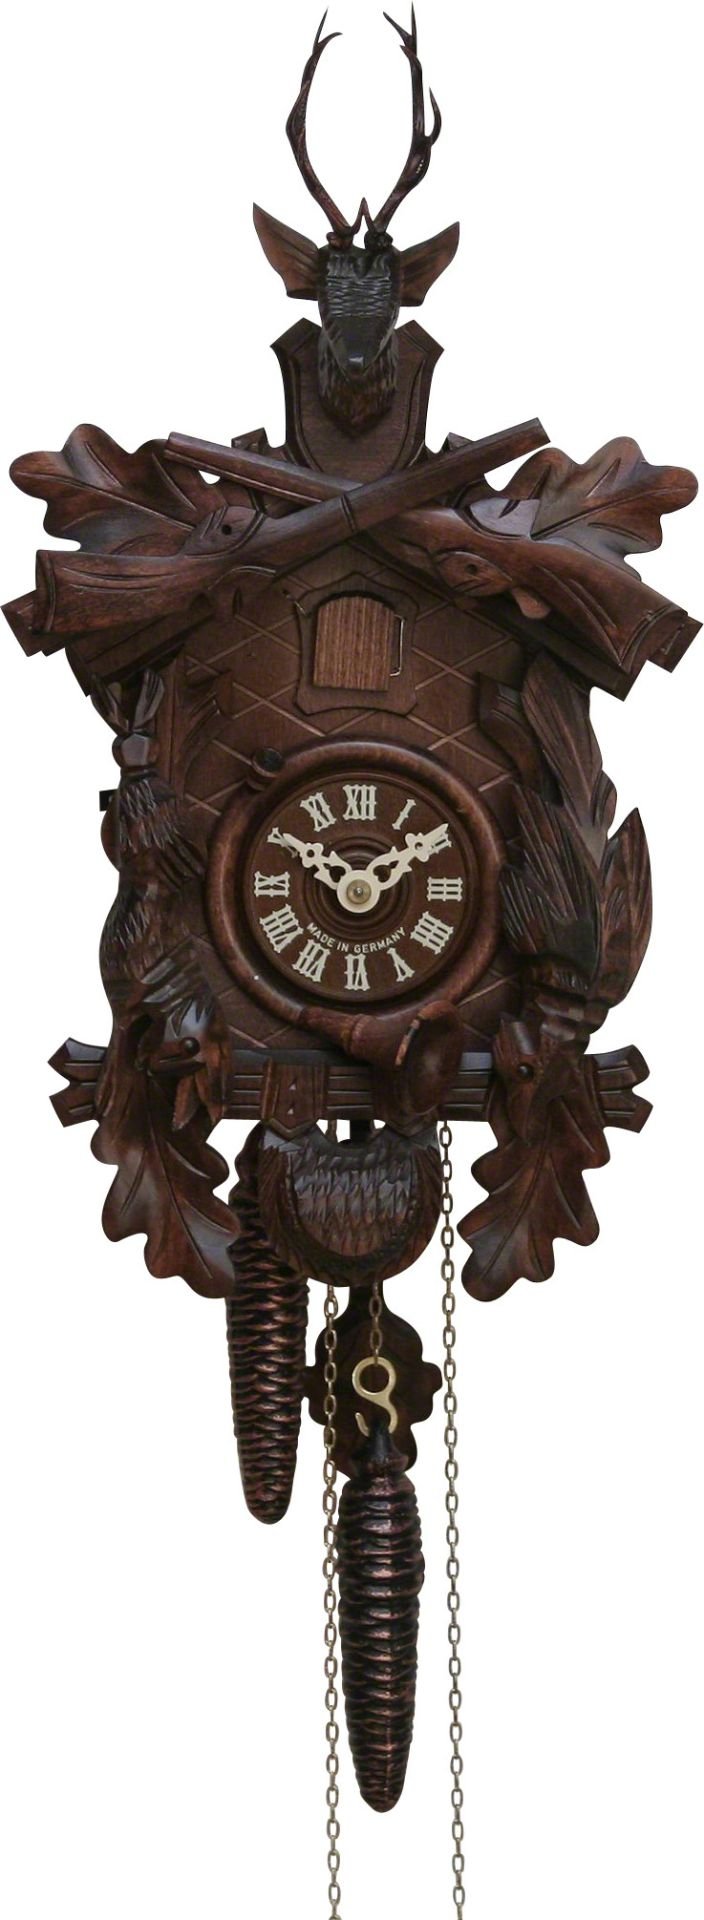 Reloj de cuco estilo “Madera tallada” movimiento mecánico de 8 días 58cm de Hekas